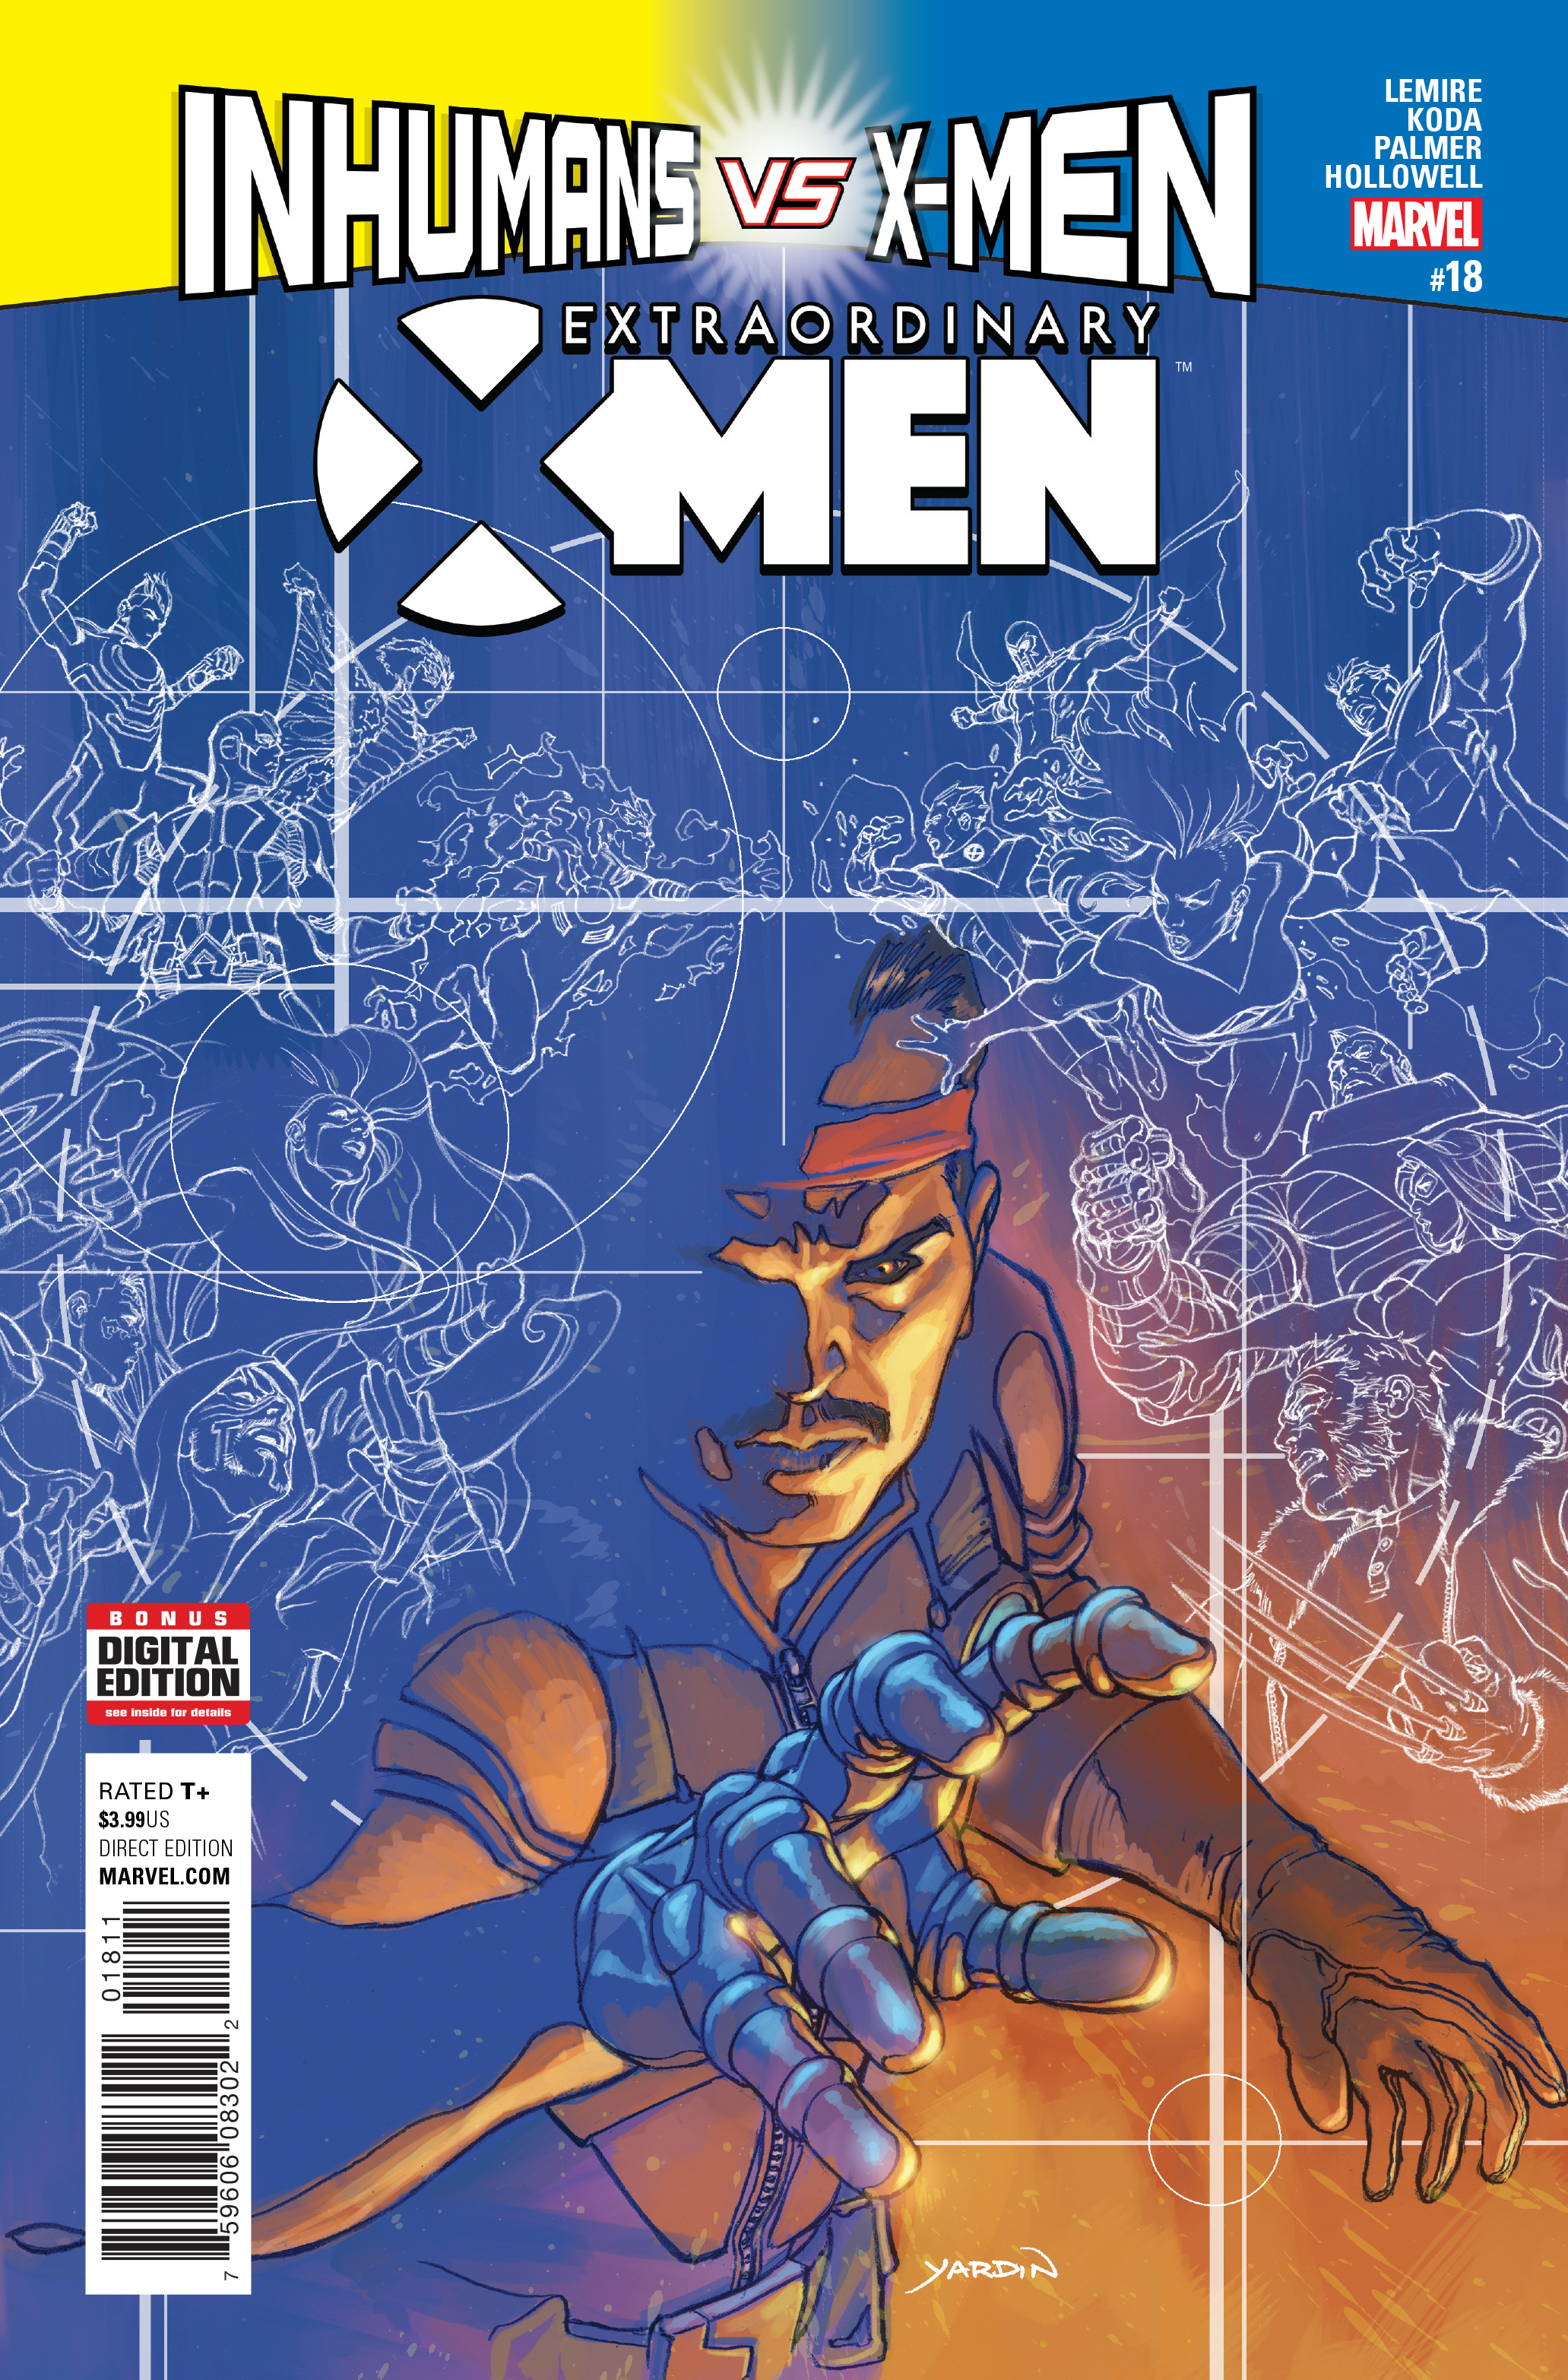 EXTRAORDINARY X-MEN #18 IVX